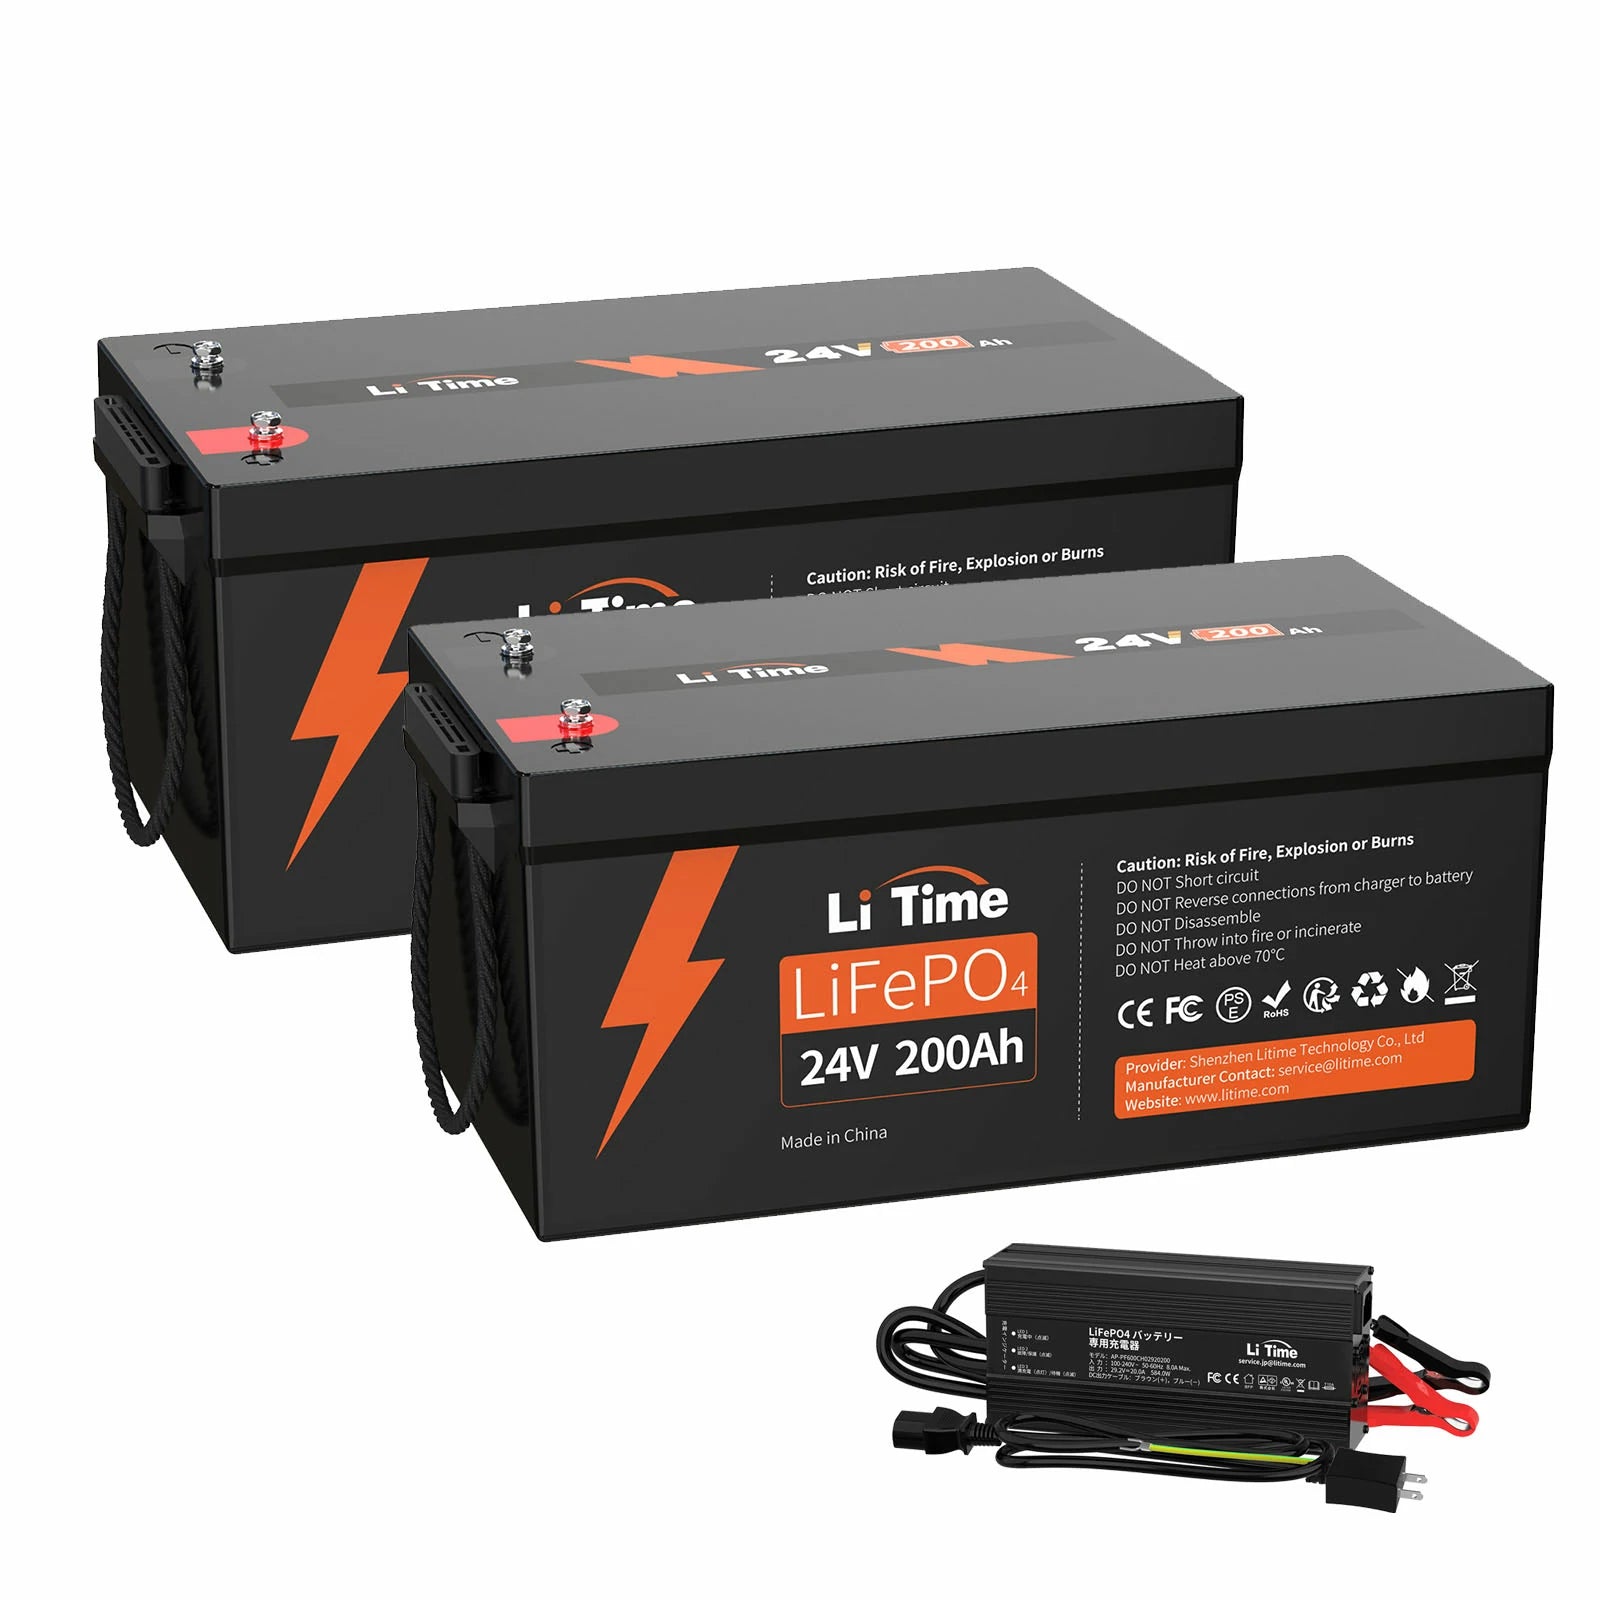 LiTime「Ampere Time 」 24V200Ah リン酸鉄リチウムイオンバッテリー 5120Wh LiFePO4 バッテリー https://jp.litime.com/products/24v200ah